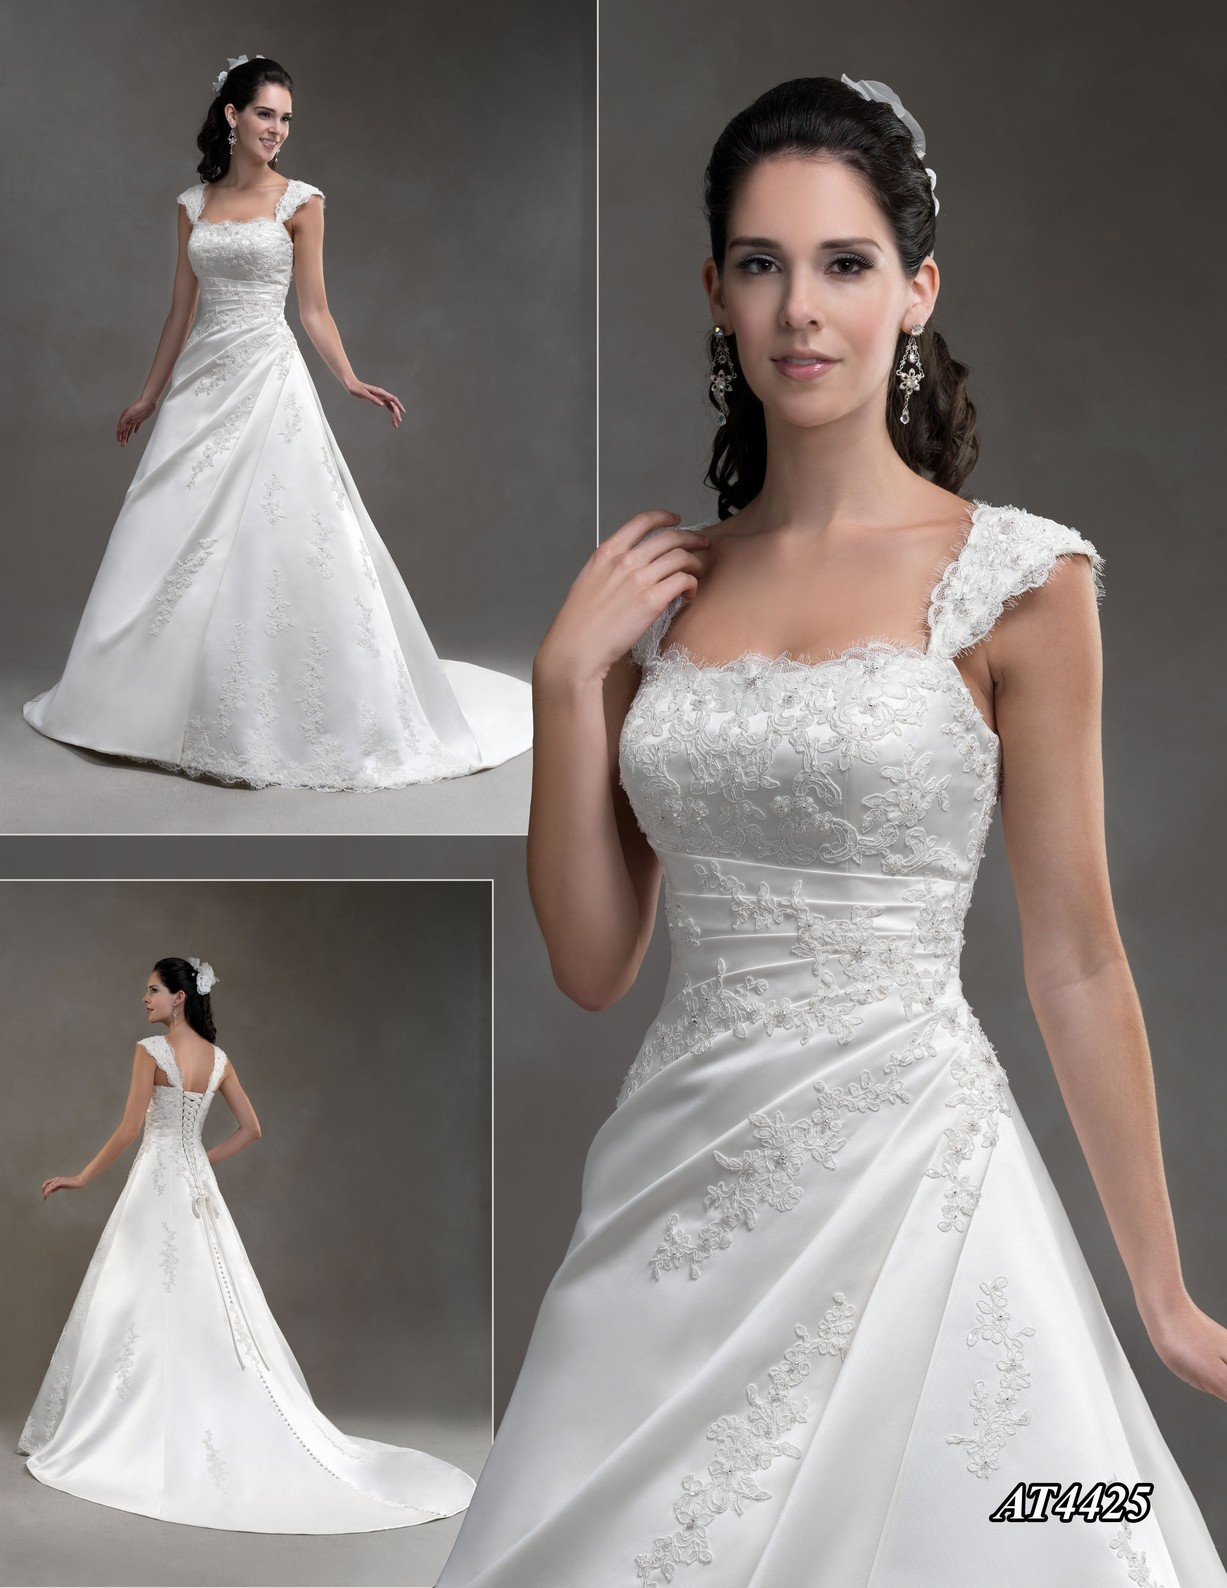 Venus Wedding Dresses
 Venus Angel and Tradition Wedding Dresses Style AT4425